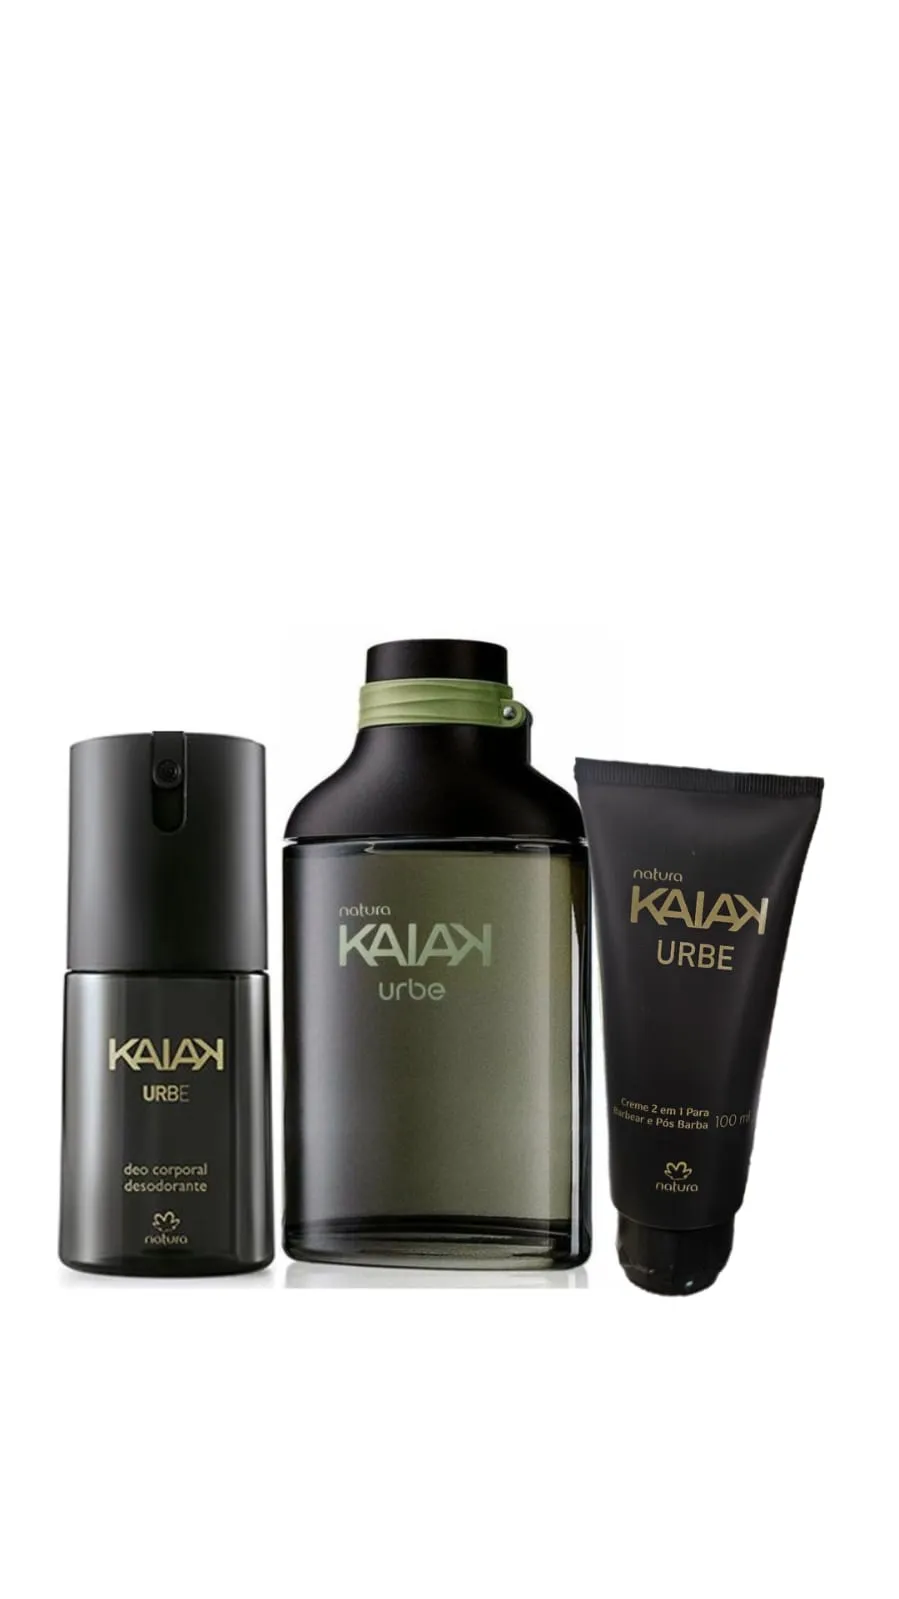 Kit Natura KAIKA URBE: Perfume Kaiak Urbe 100mL, Crema 2 en 1 para barba Kaiak Urbe 100mL y Spray desodorante Kaiak Urbe 100mL